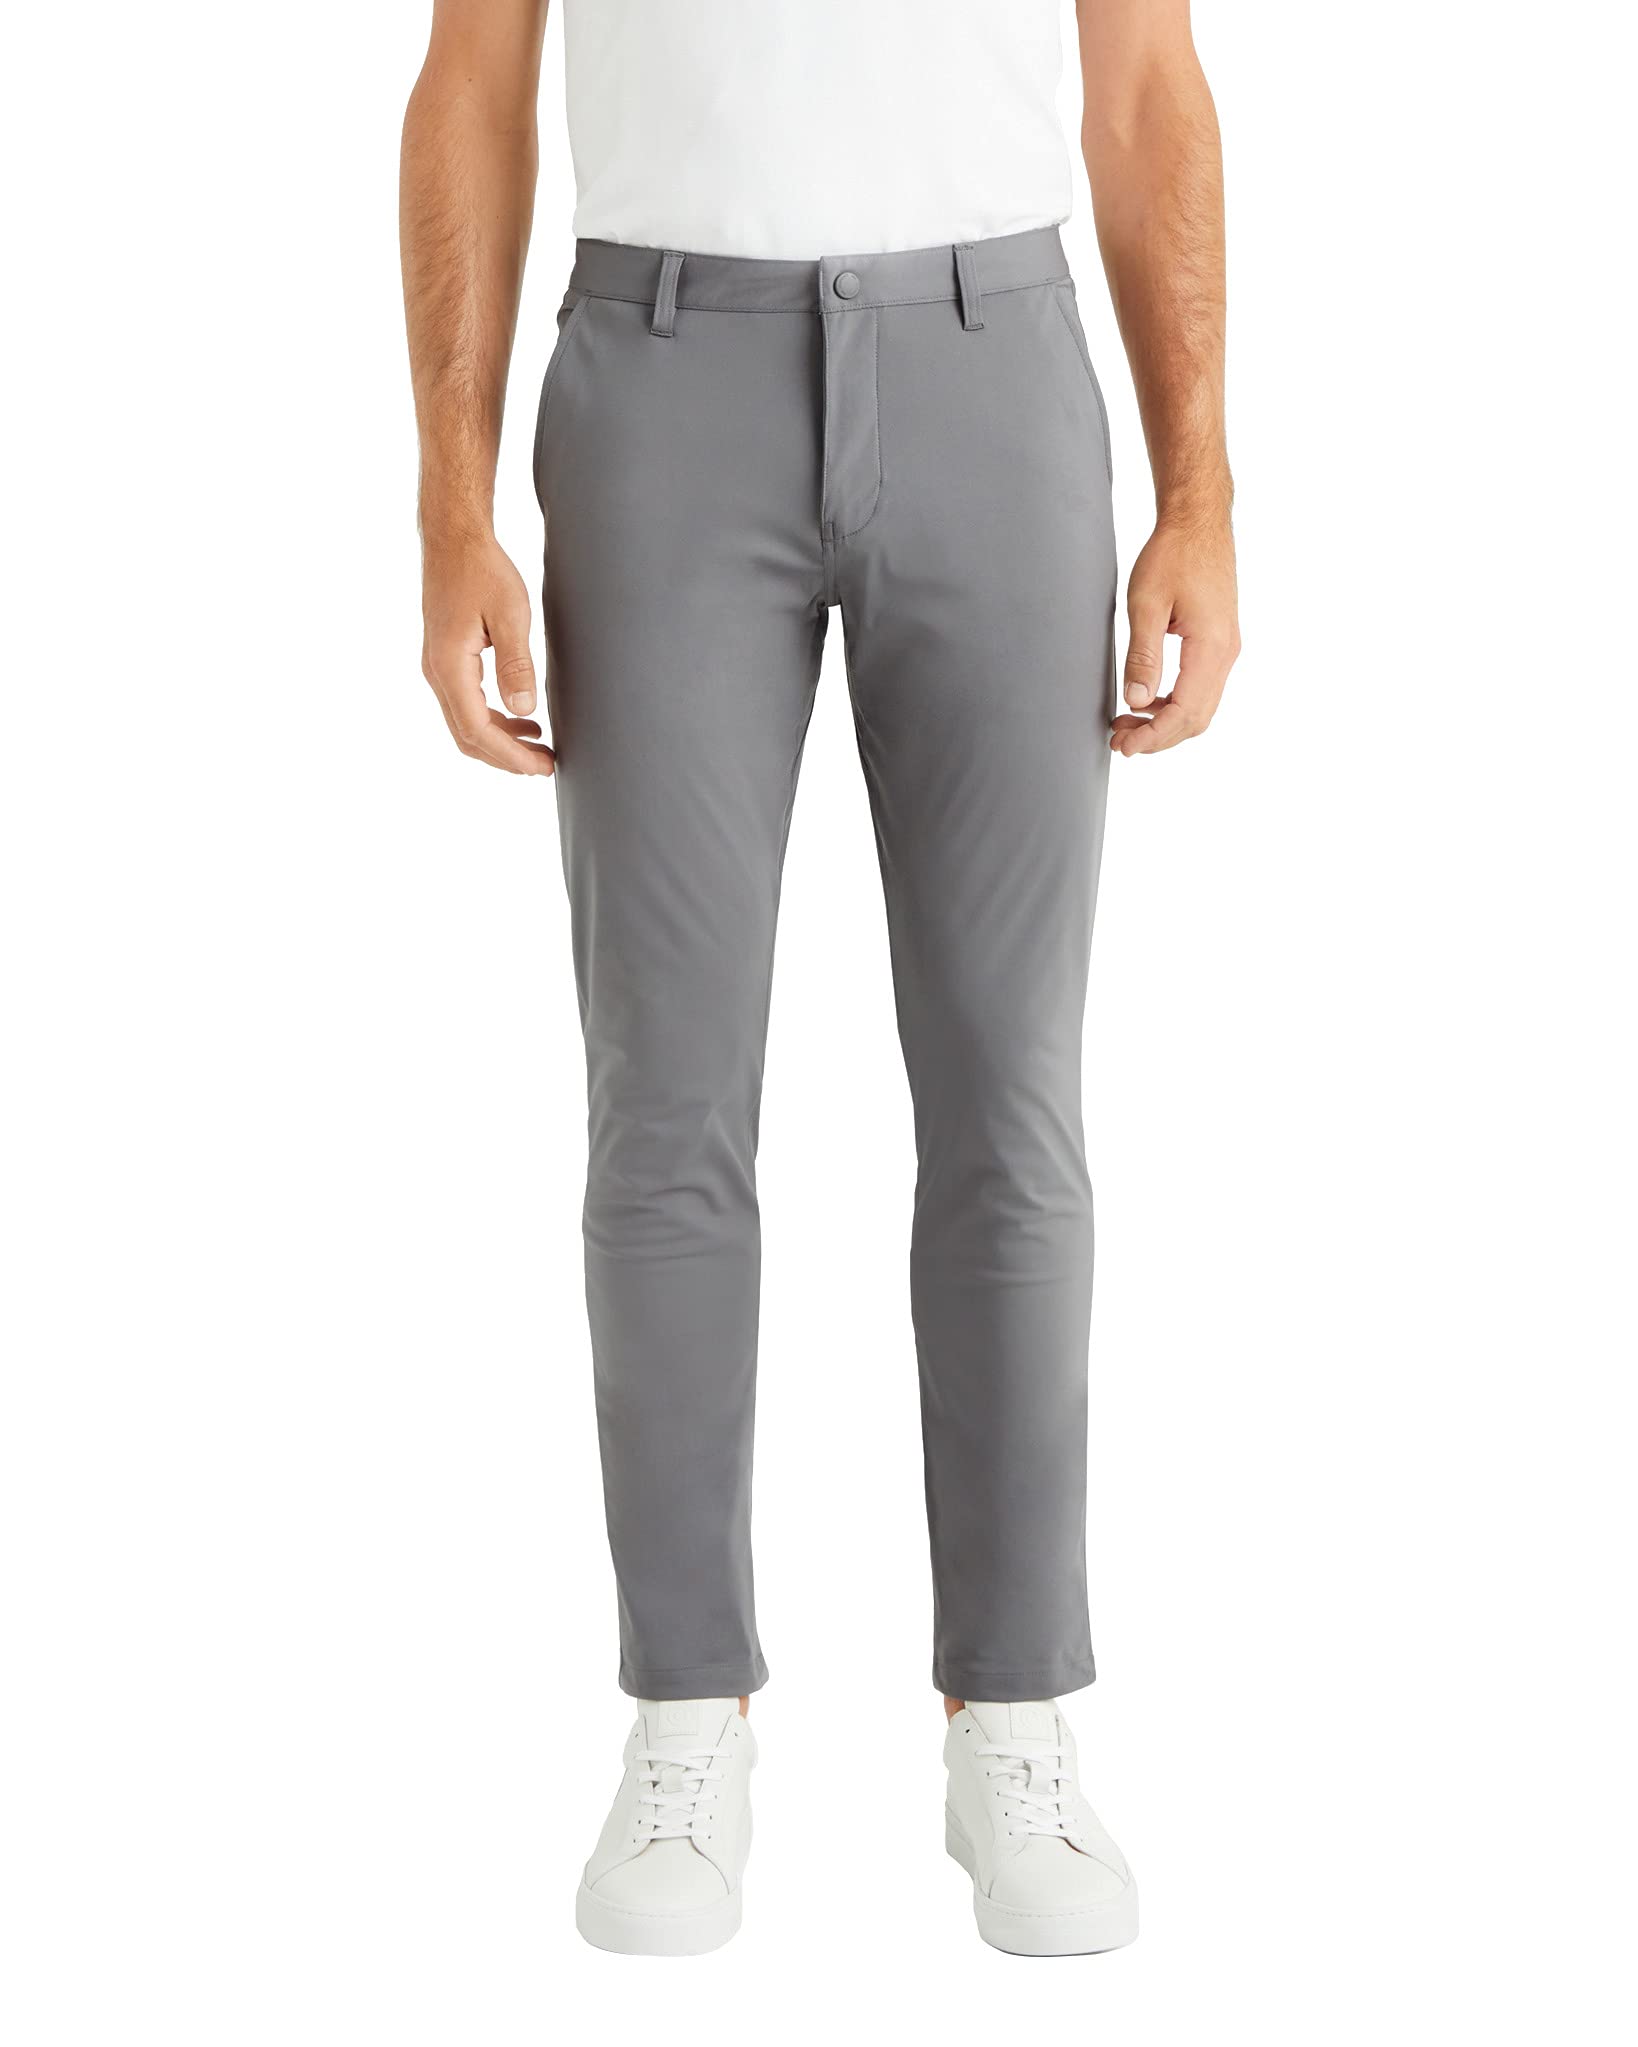 HUGO BOSS Hesten Birdseye Extra Slim Fit Suit Pants - ShopStyle